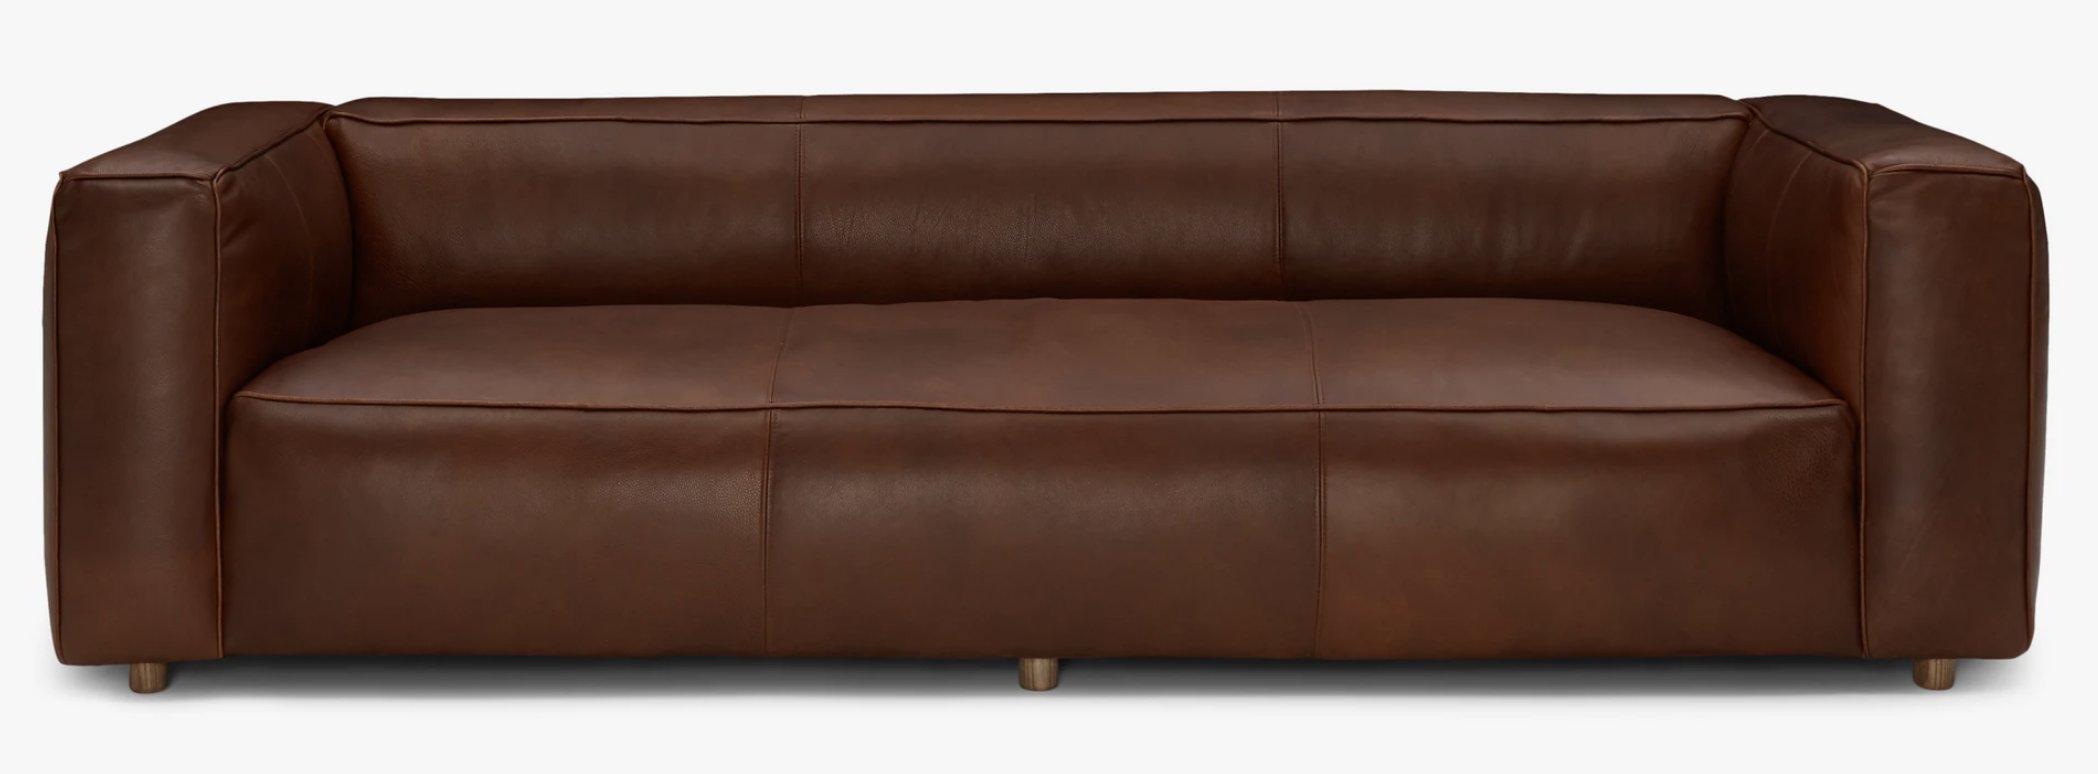 Jaxon Leather Sofa in Reynoso Chocolate - Image 0